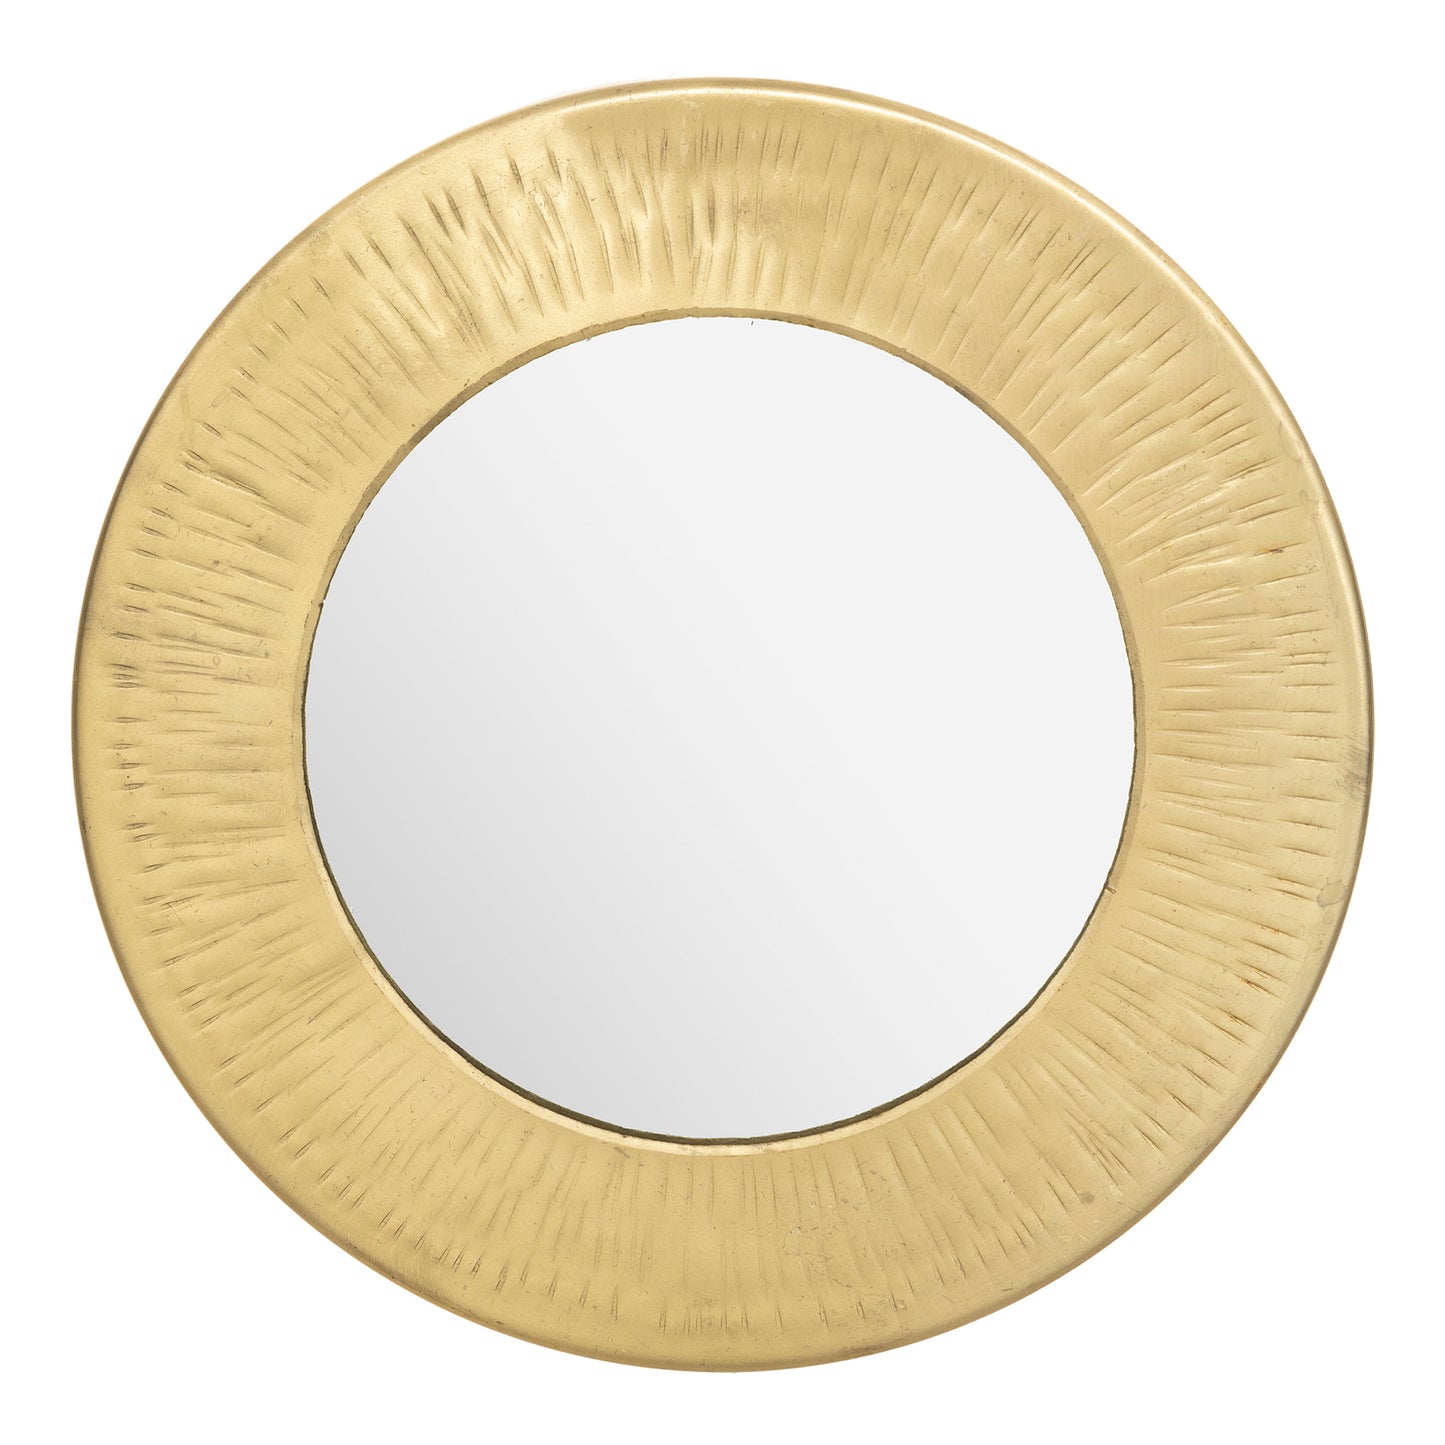 Atmopshera Romy spiegel - Goud